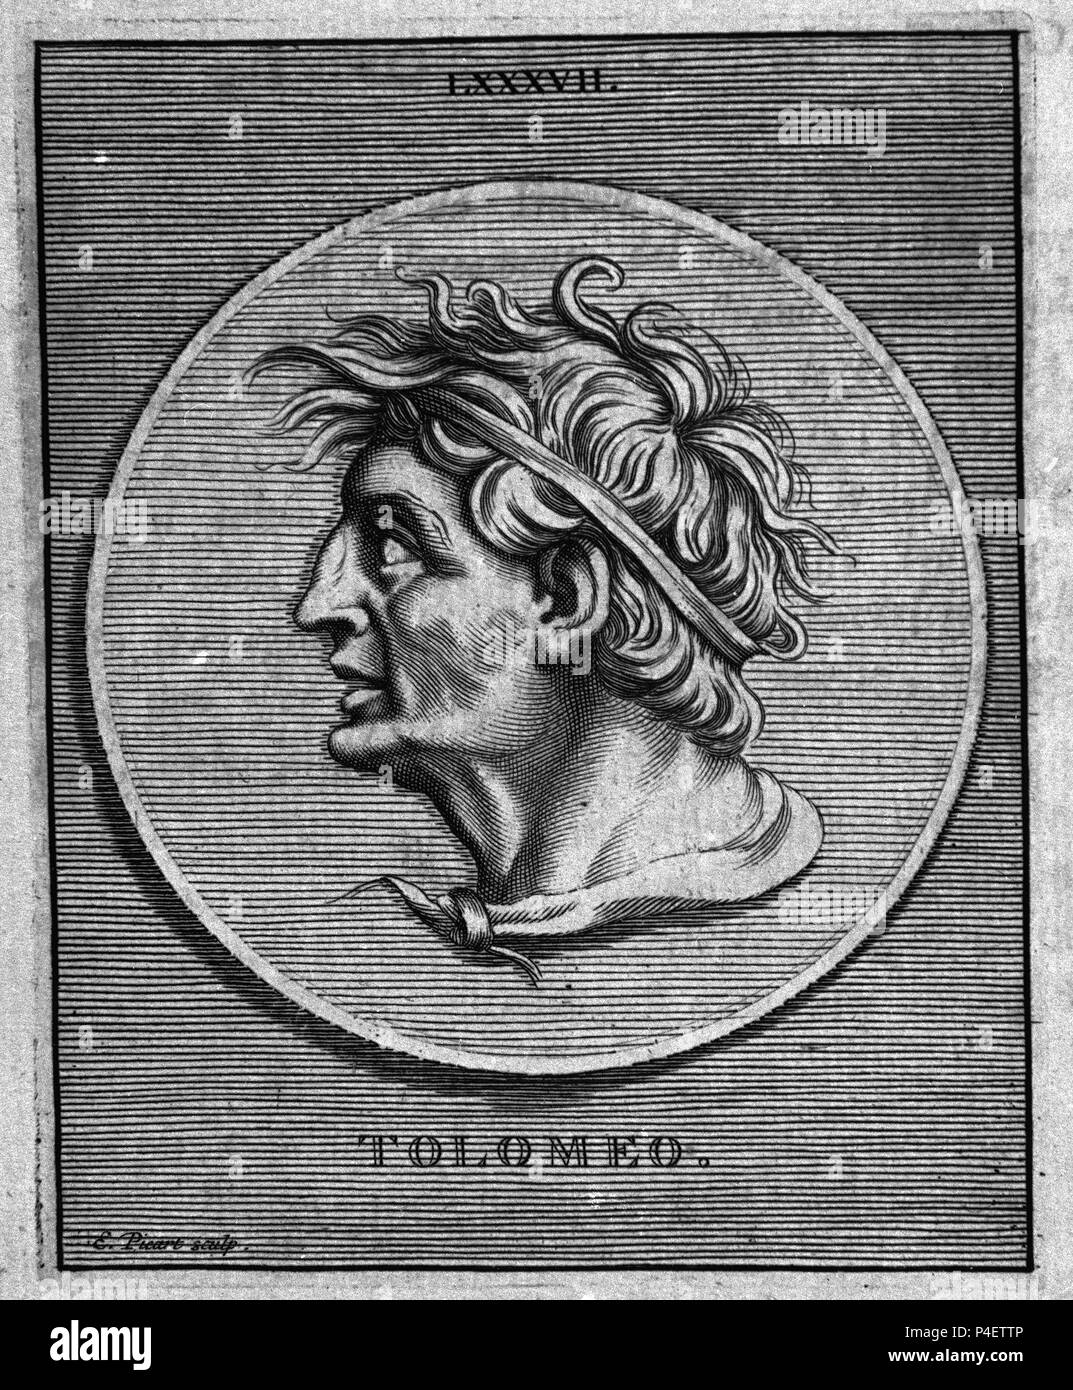 Retrato del faraón Ptolomeo II Filadelfo (ca. 309-246 a.C.). Grabado del  siglo XIX.